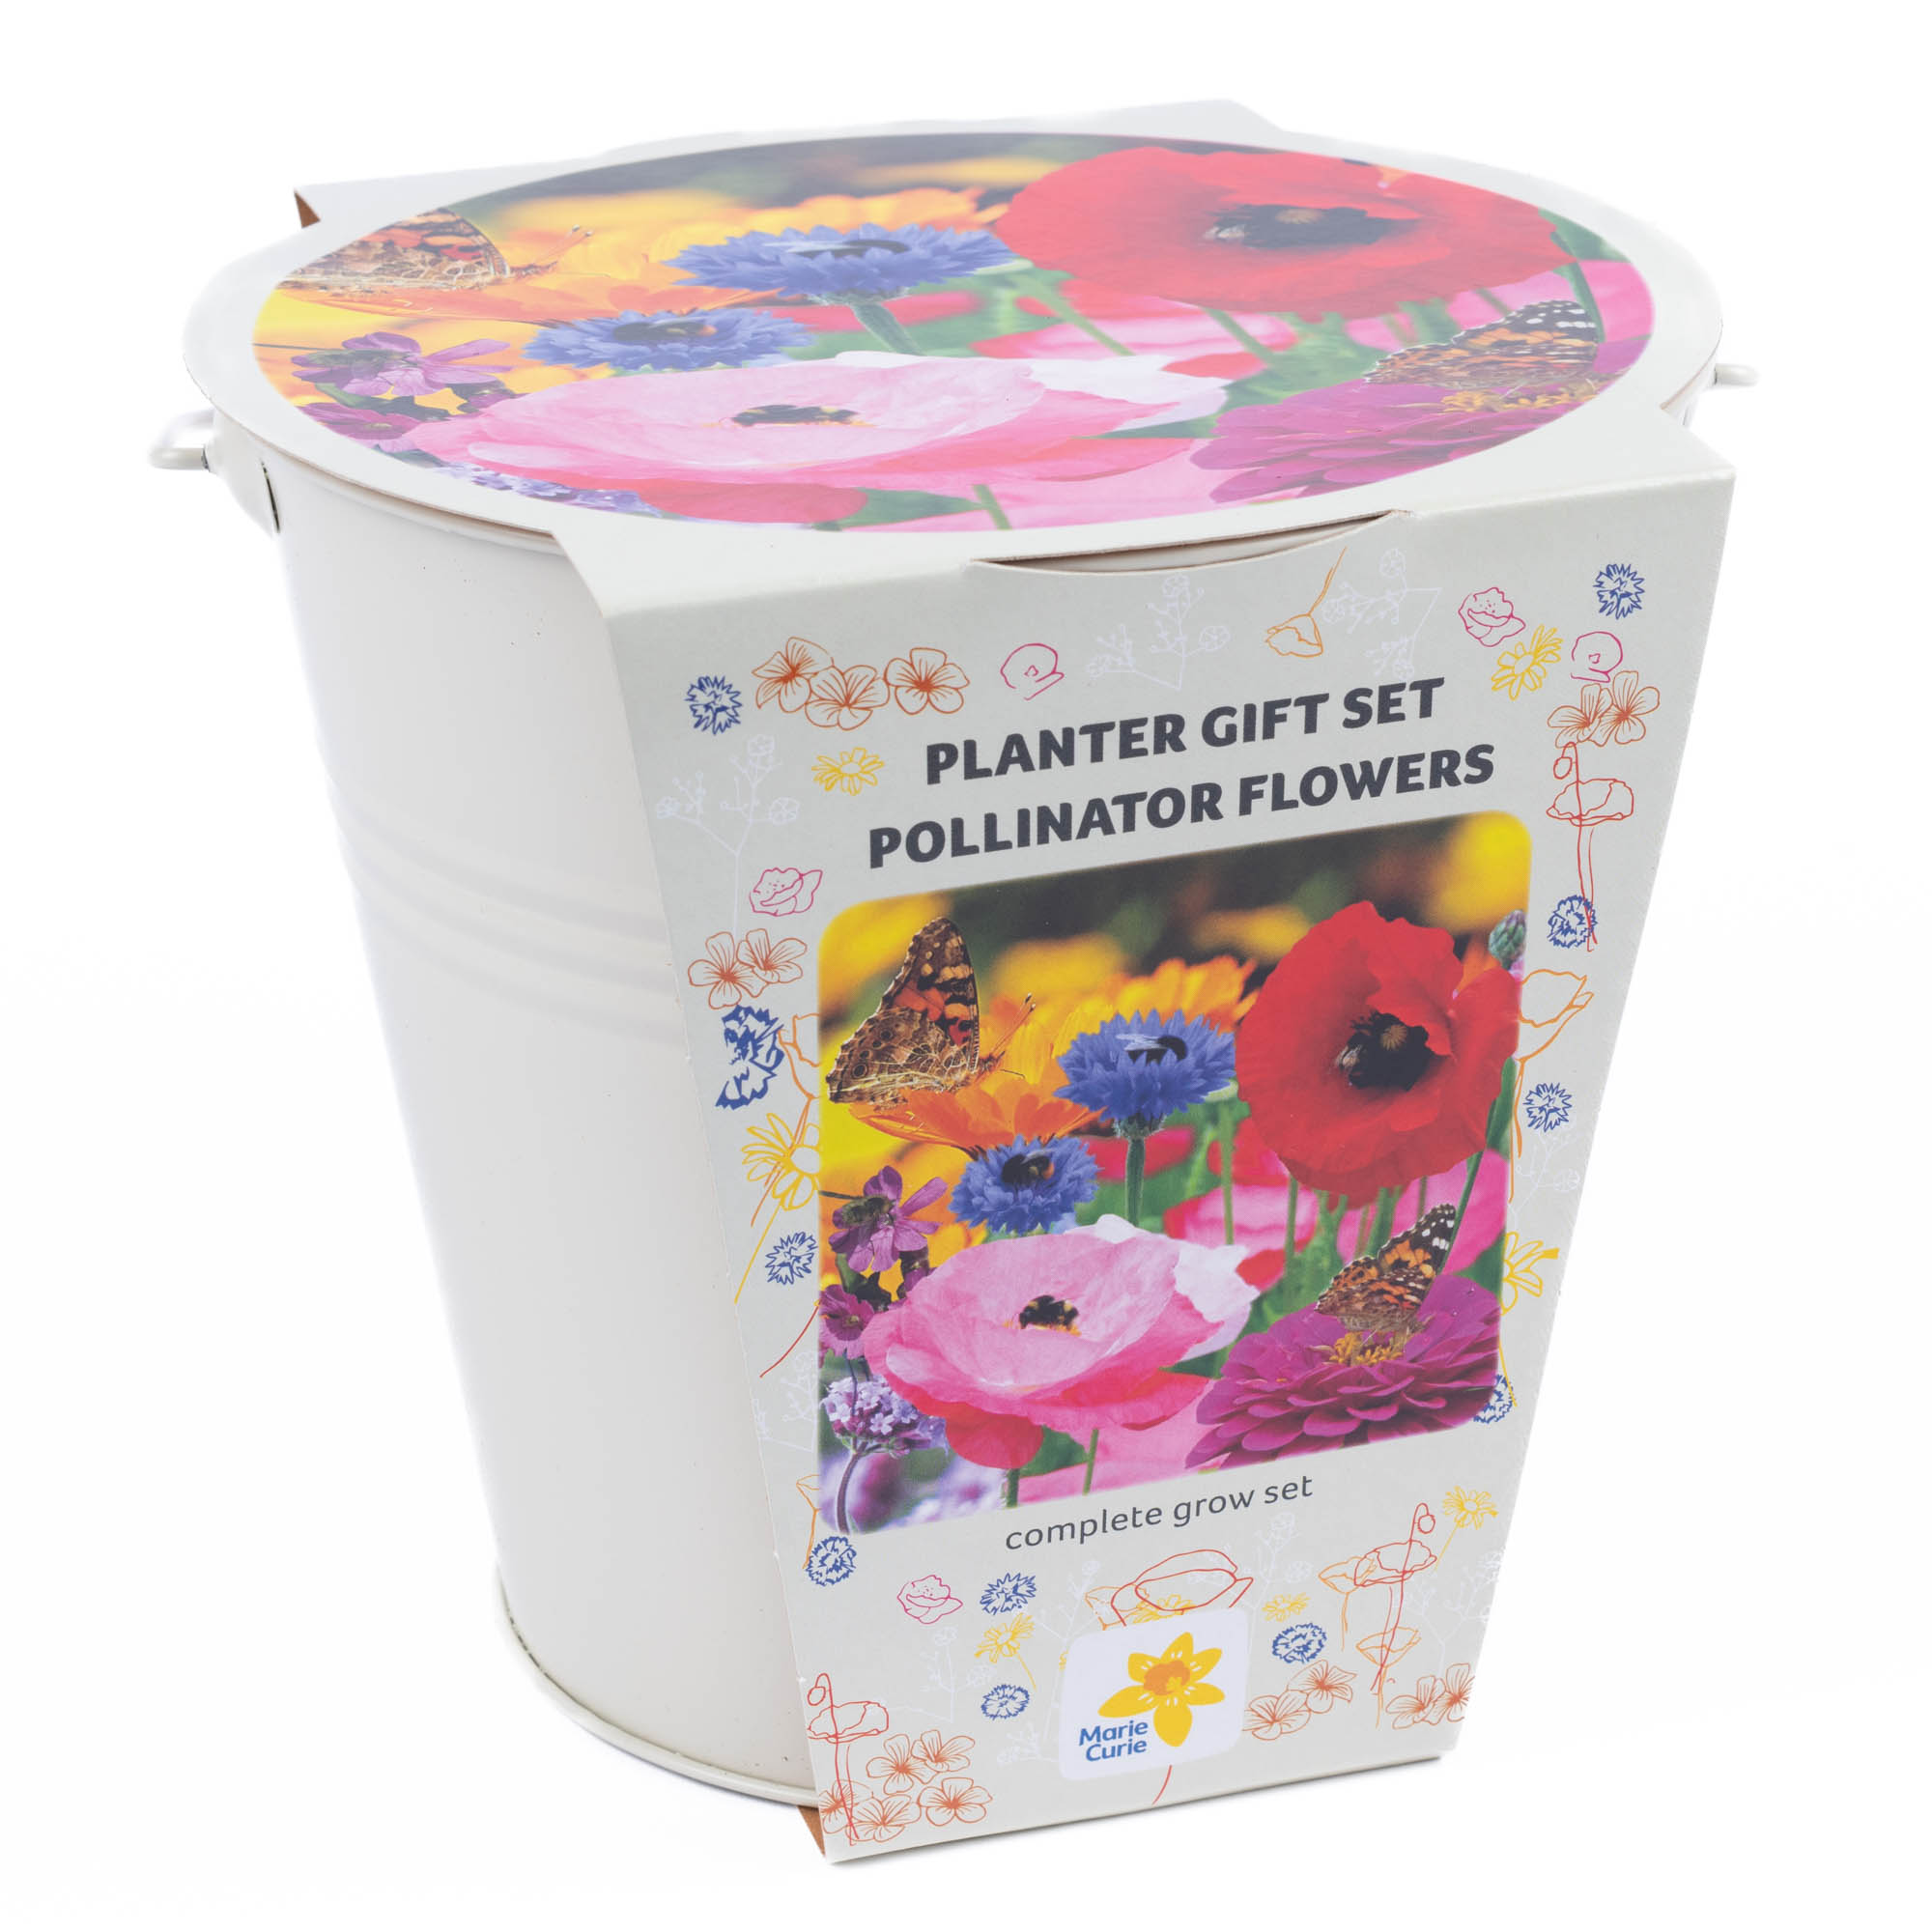 Marie Curie Pollinator Gift Bucket Planter Set